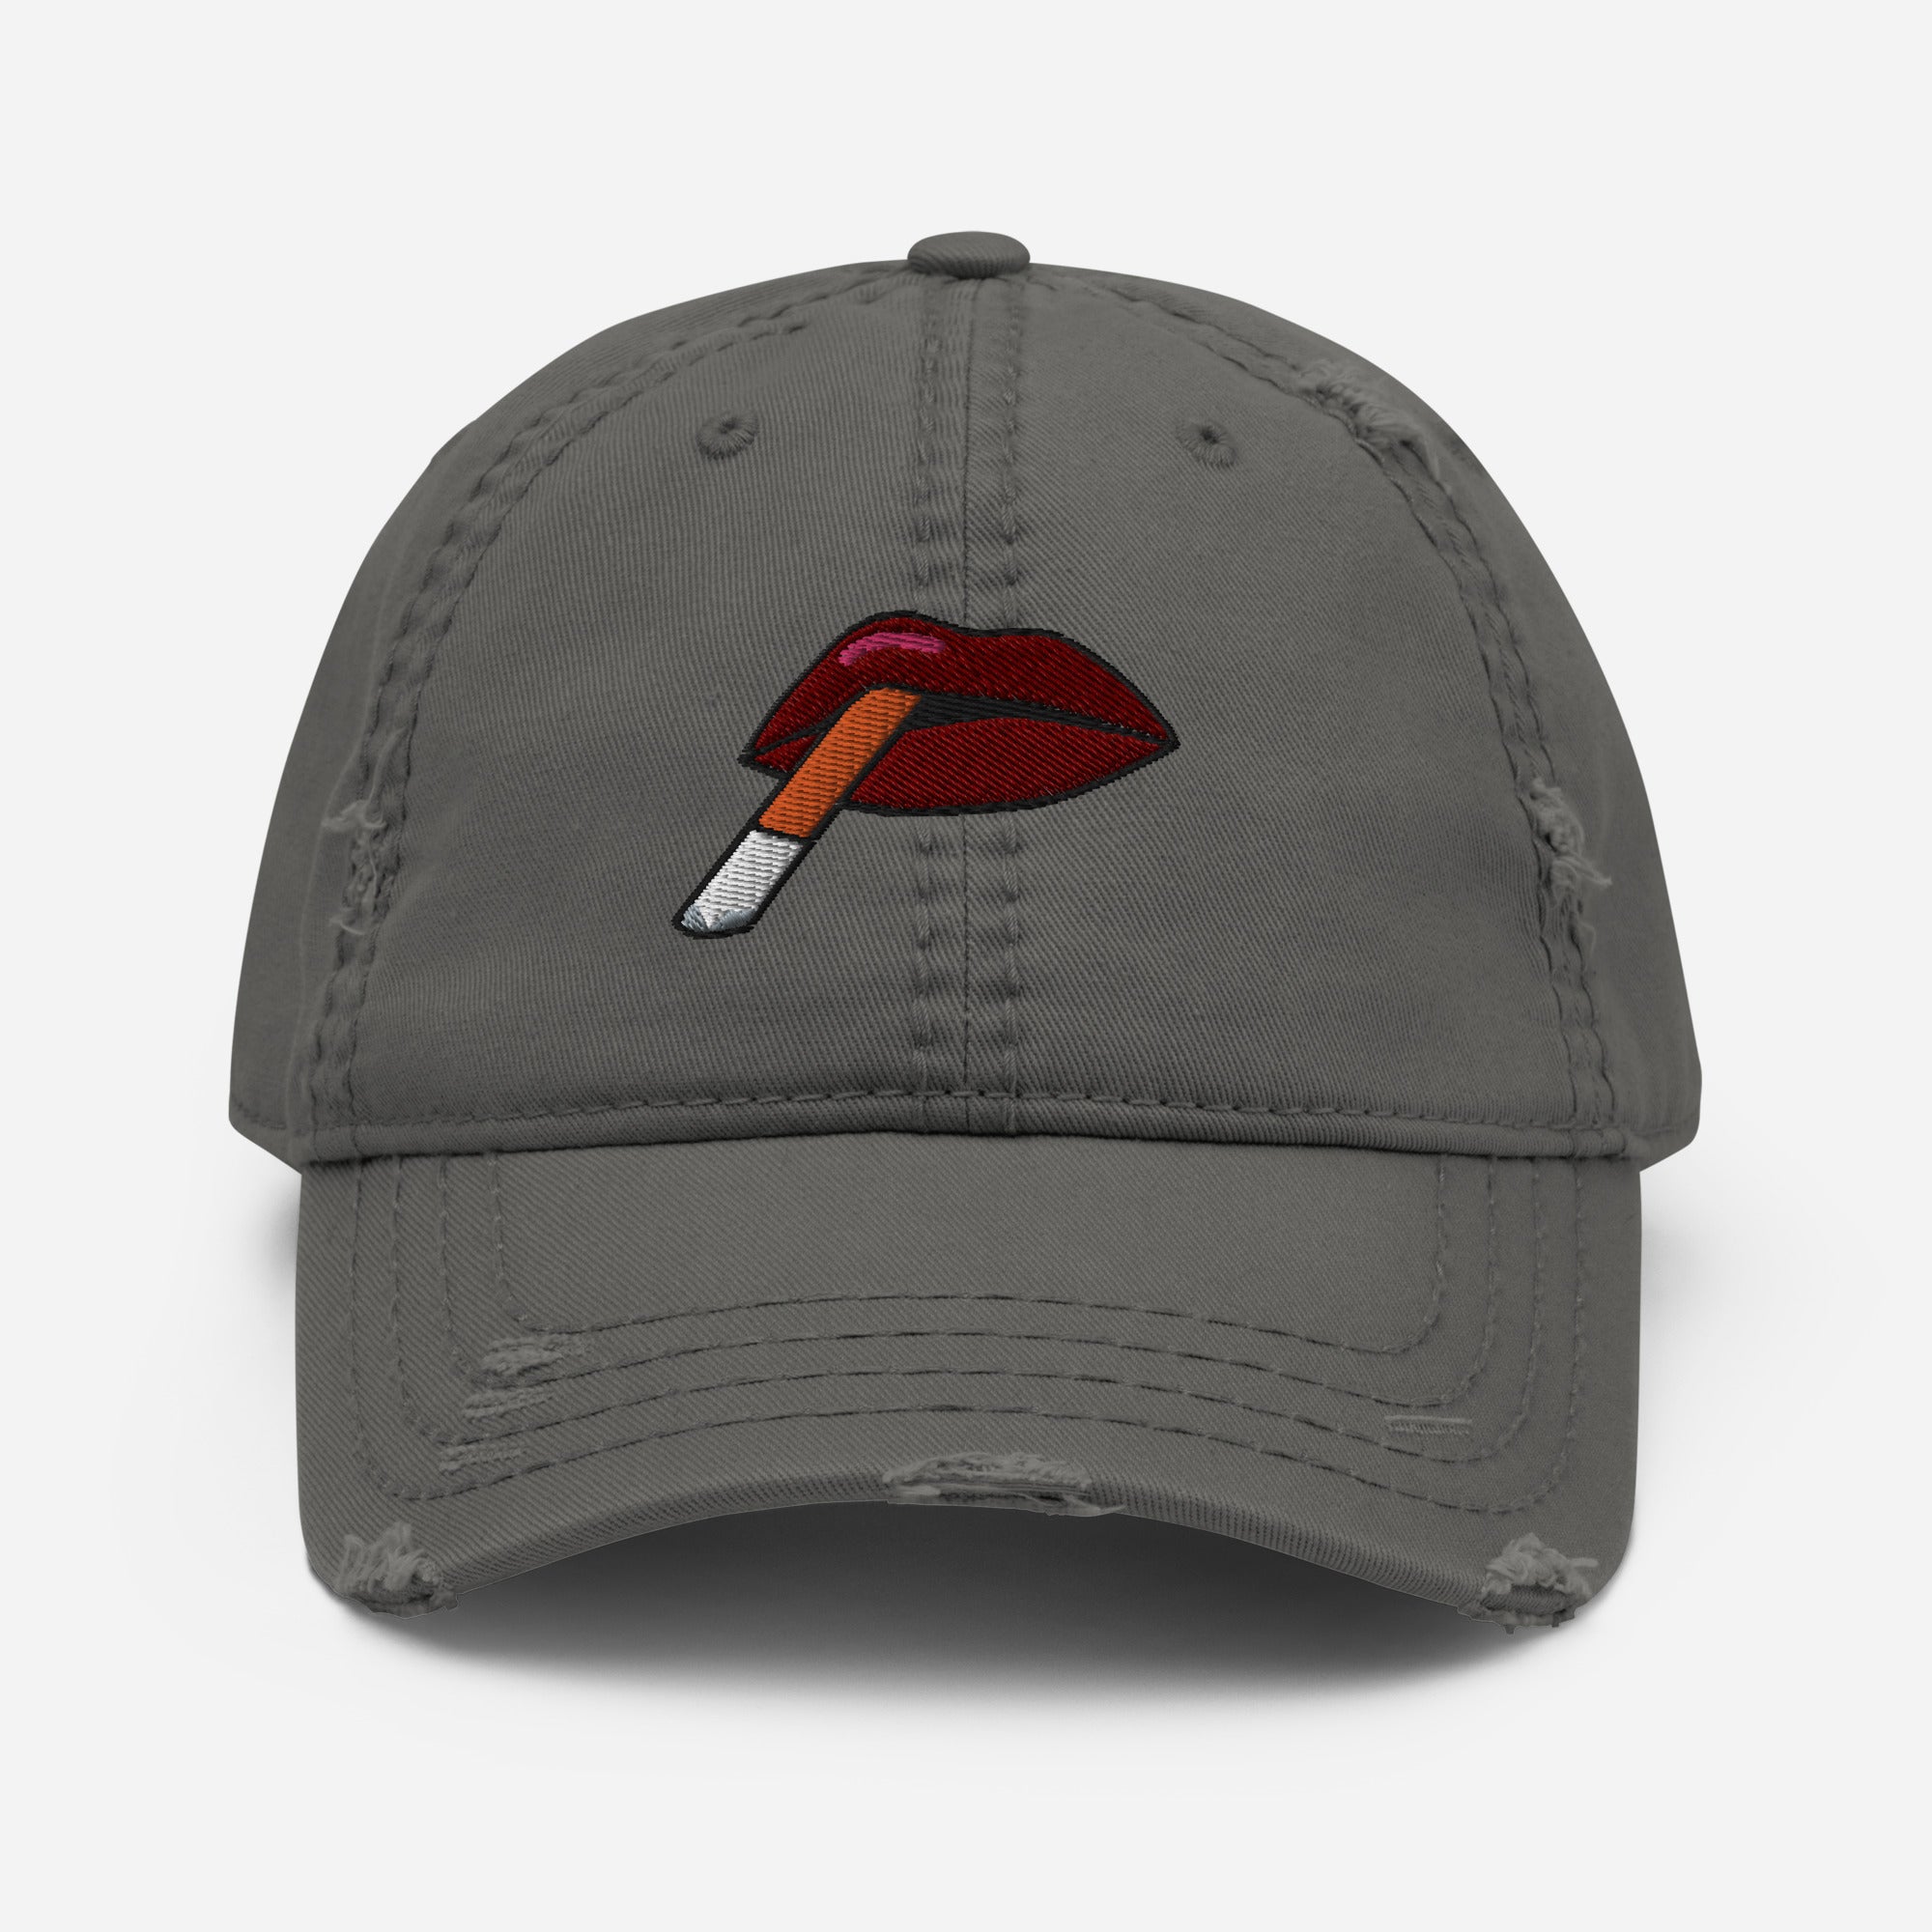 Lip Service Distressed Hat